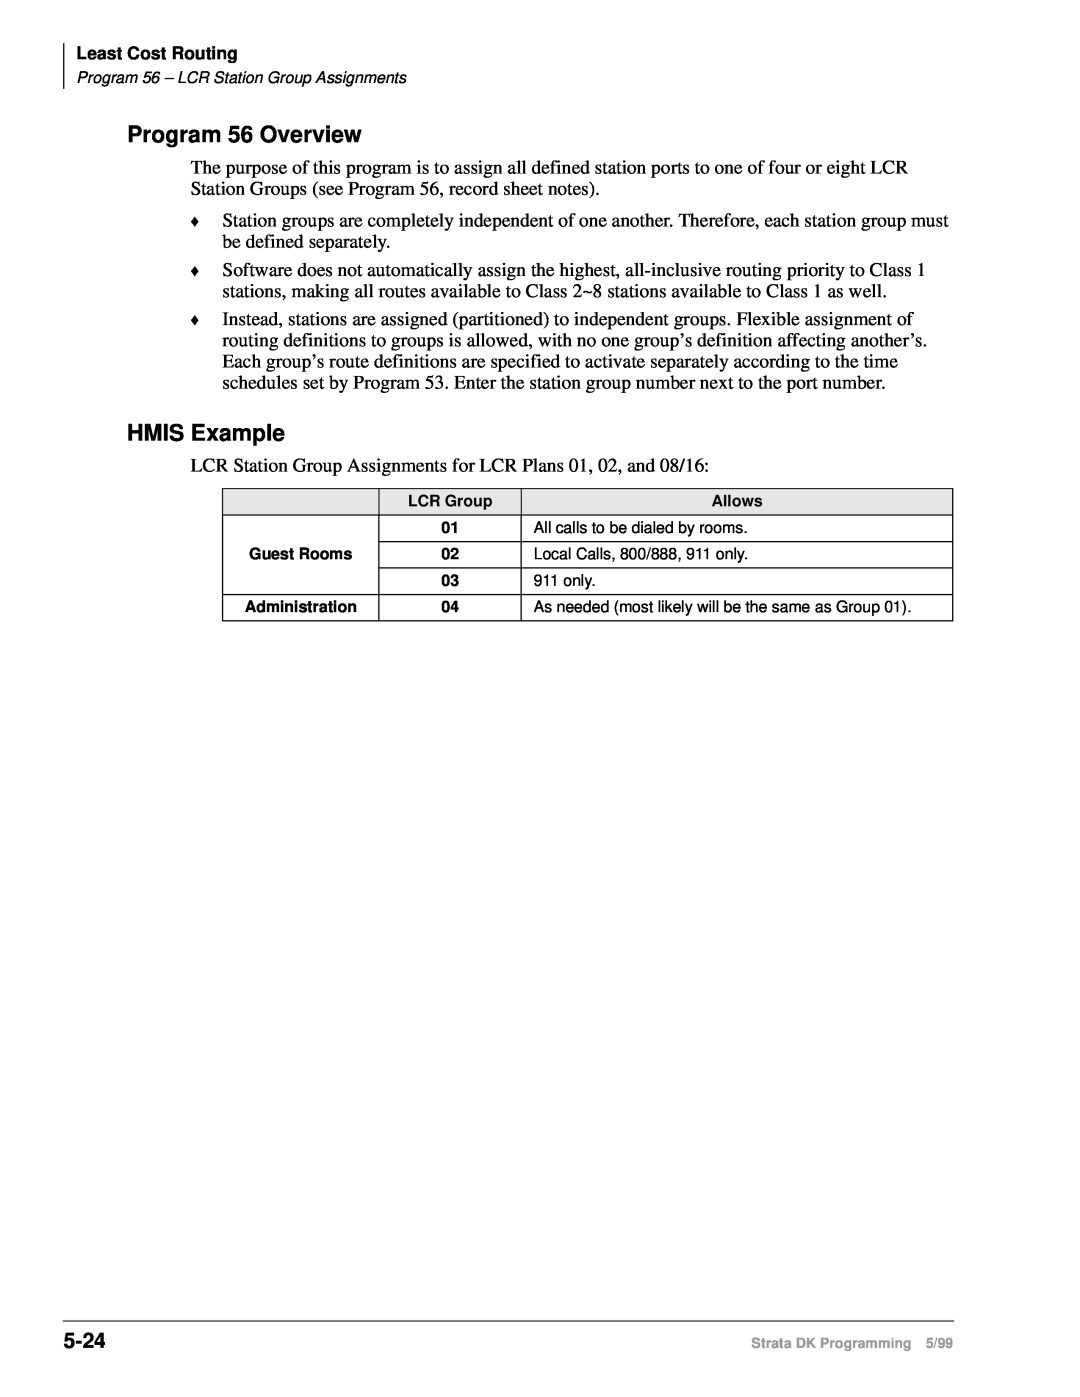 Toshiba dk14 manual Program 56 Overview, 5-24, HMIS Example 